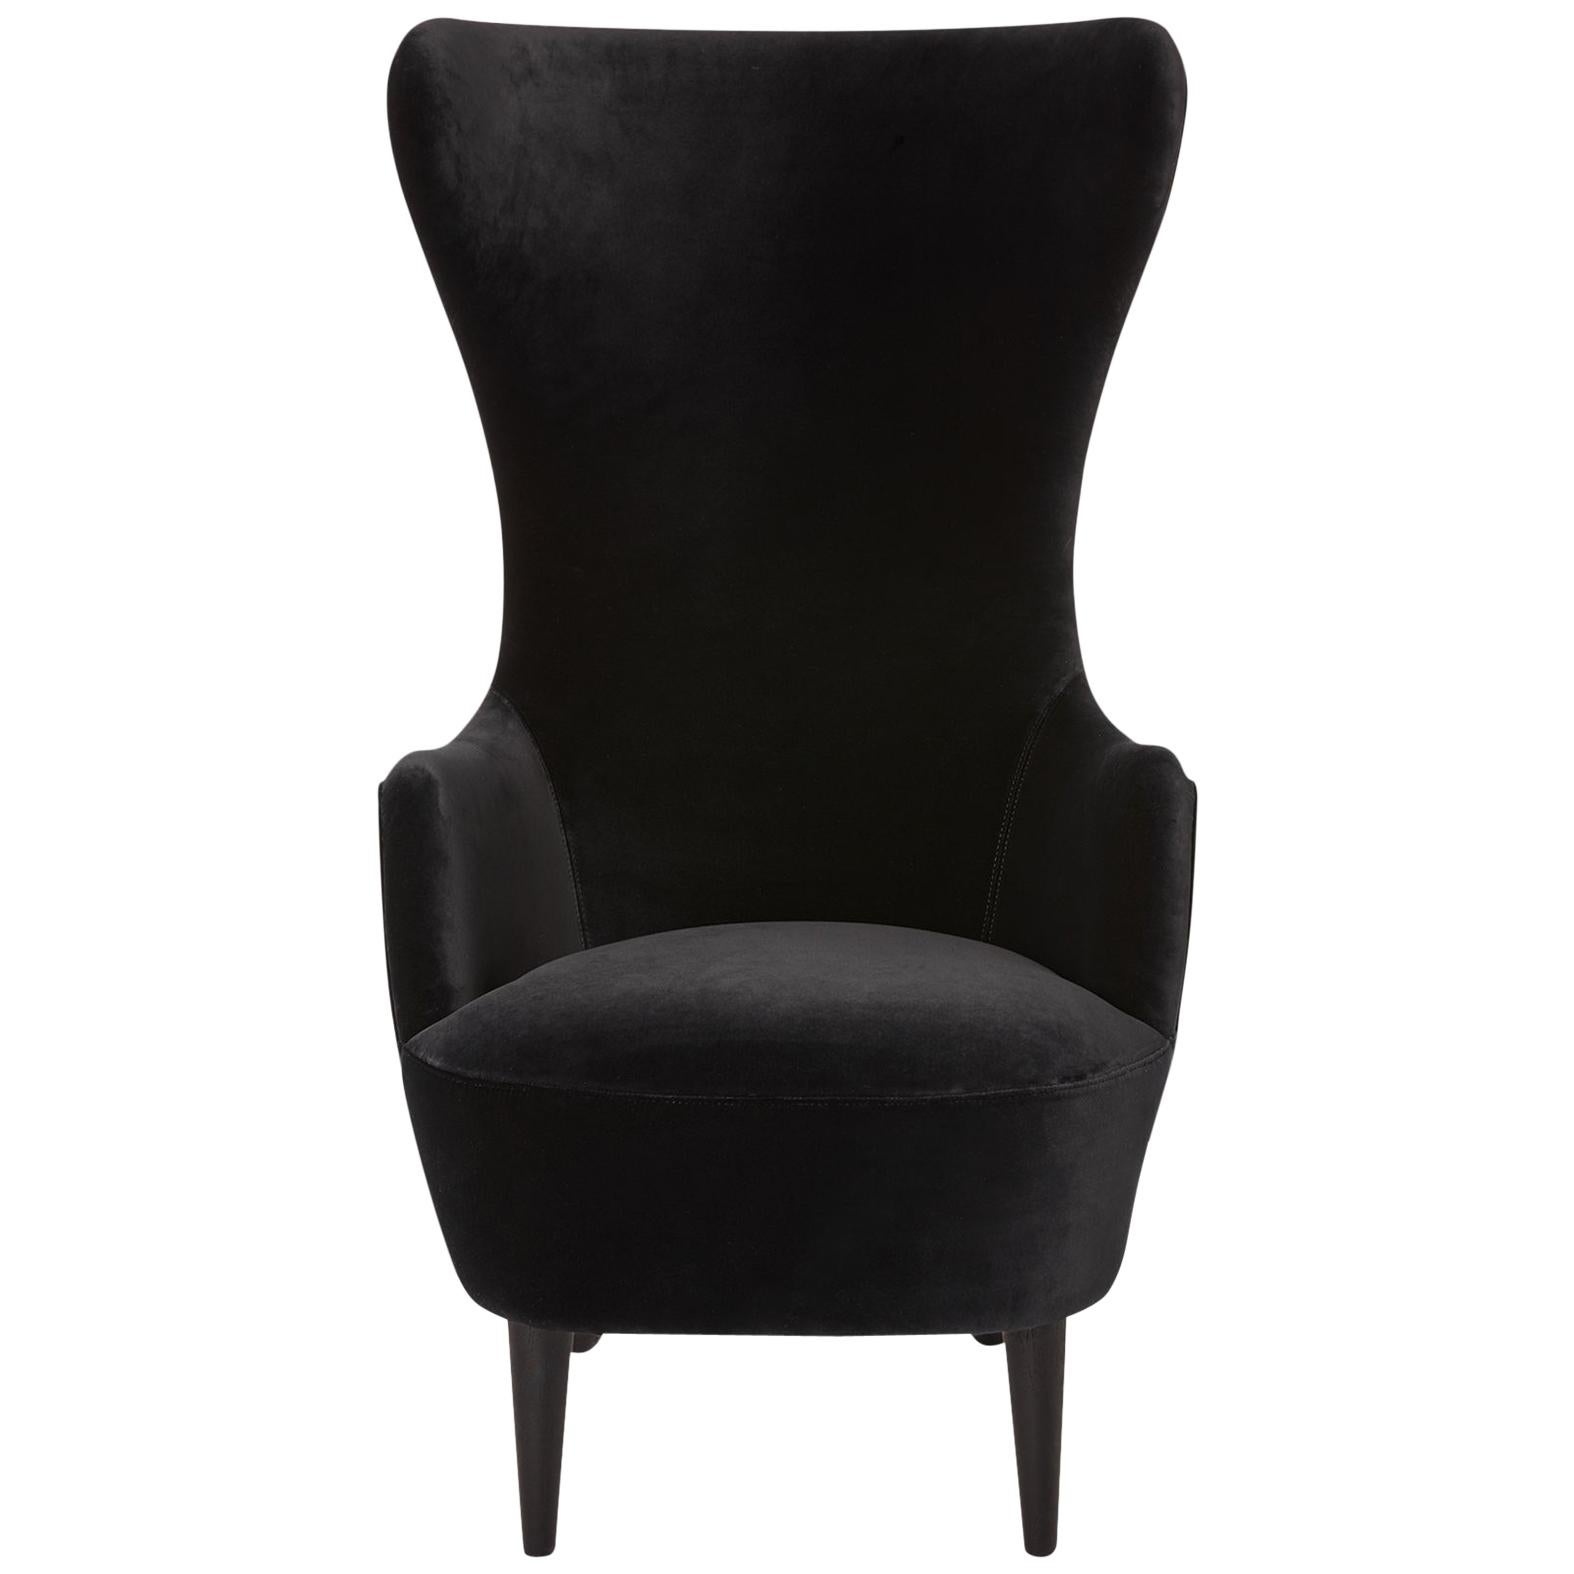 Black (cassia black.jpg) Wingback Chair with Black Legs by Tom Dixon